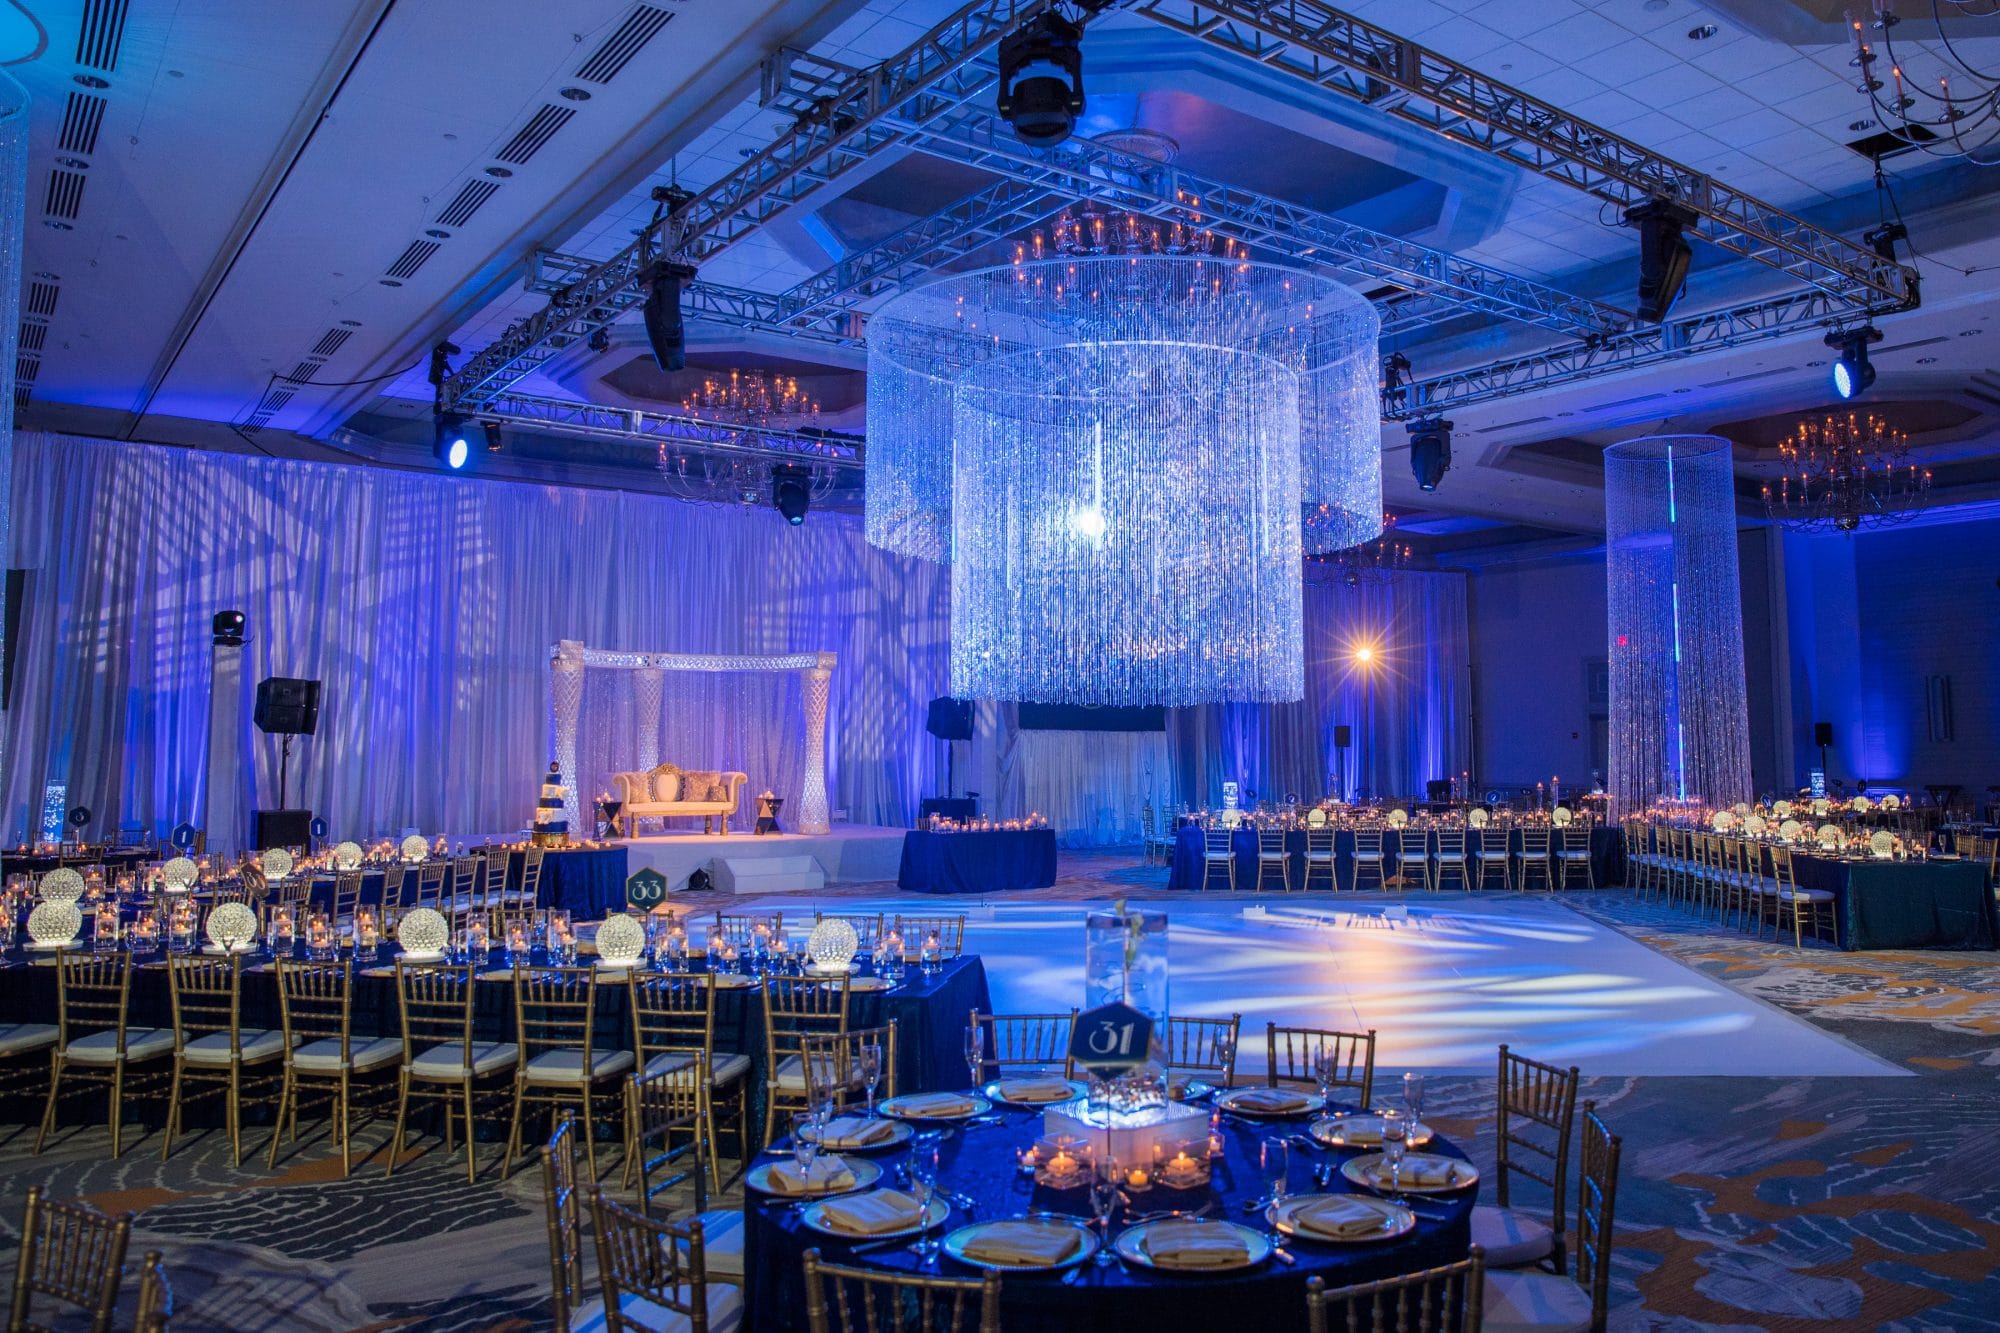 Hilton Daytona Beach Oceanfront Resort - grand reception hall with stunning chandelier